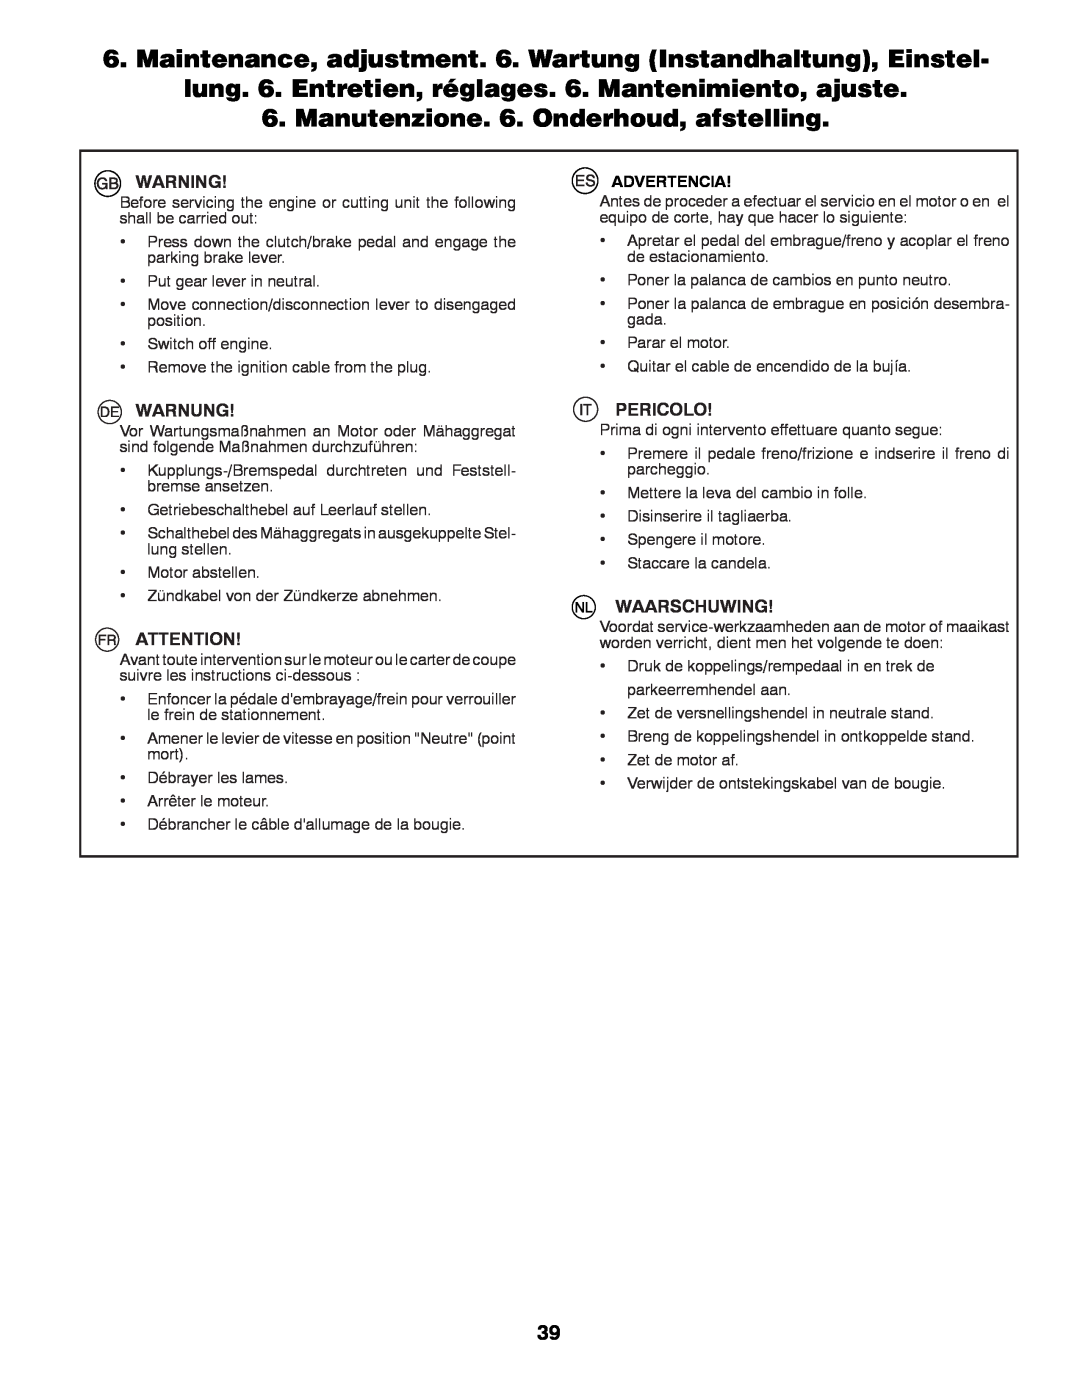 Husqvarna LT131 instruction manual Manutenzione. 6. Onderhoud, afstelling, Warnung, Pericolo, Waarschuwing, Advertencia 